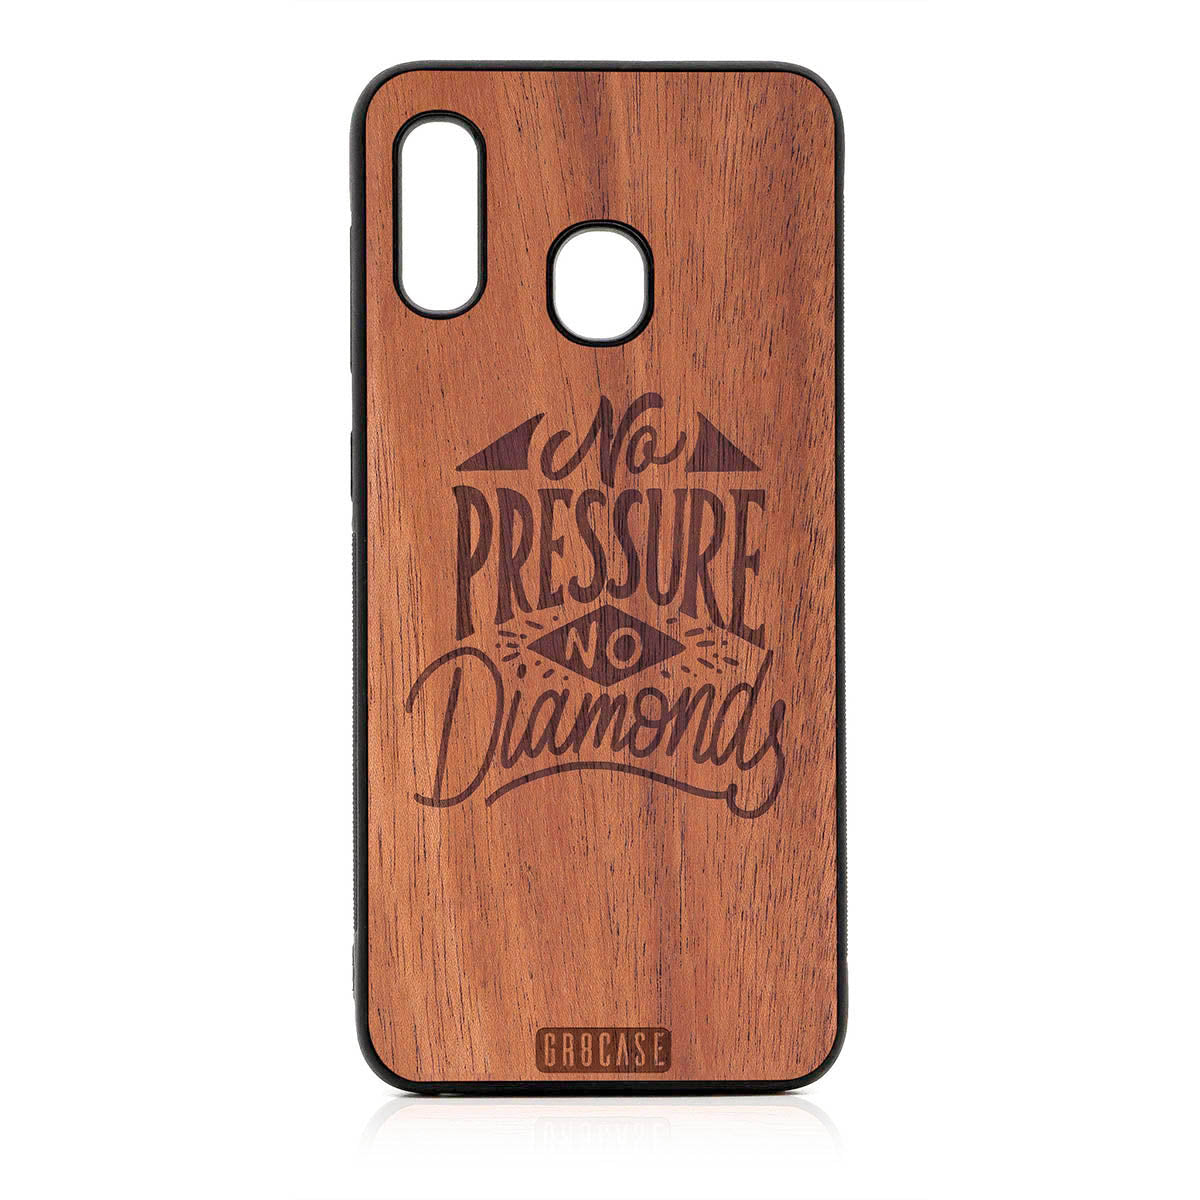 No Pressure No Diamonds Design Wood Case For Samsung Galaxy A20